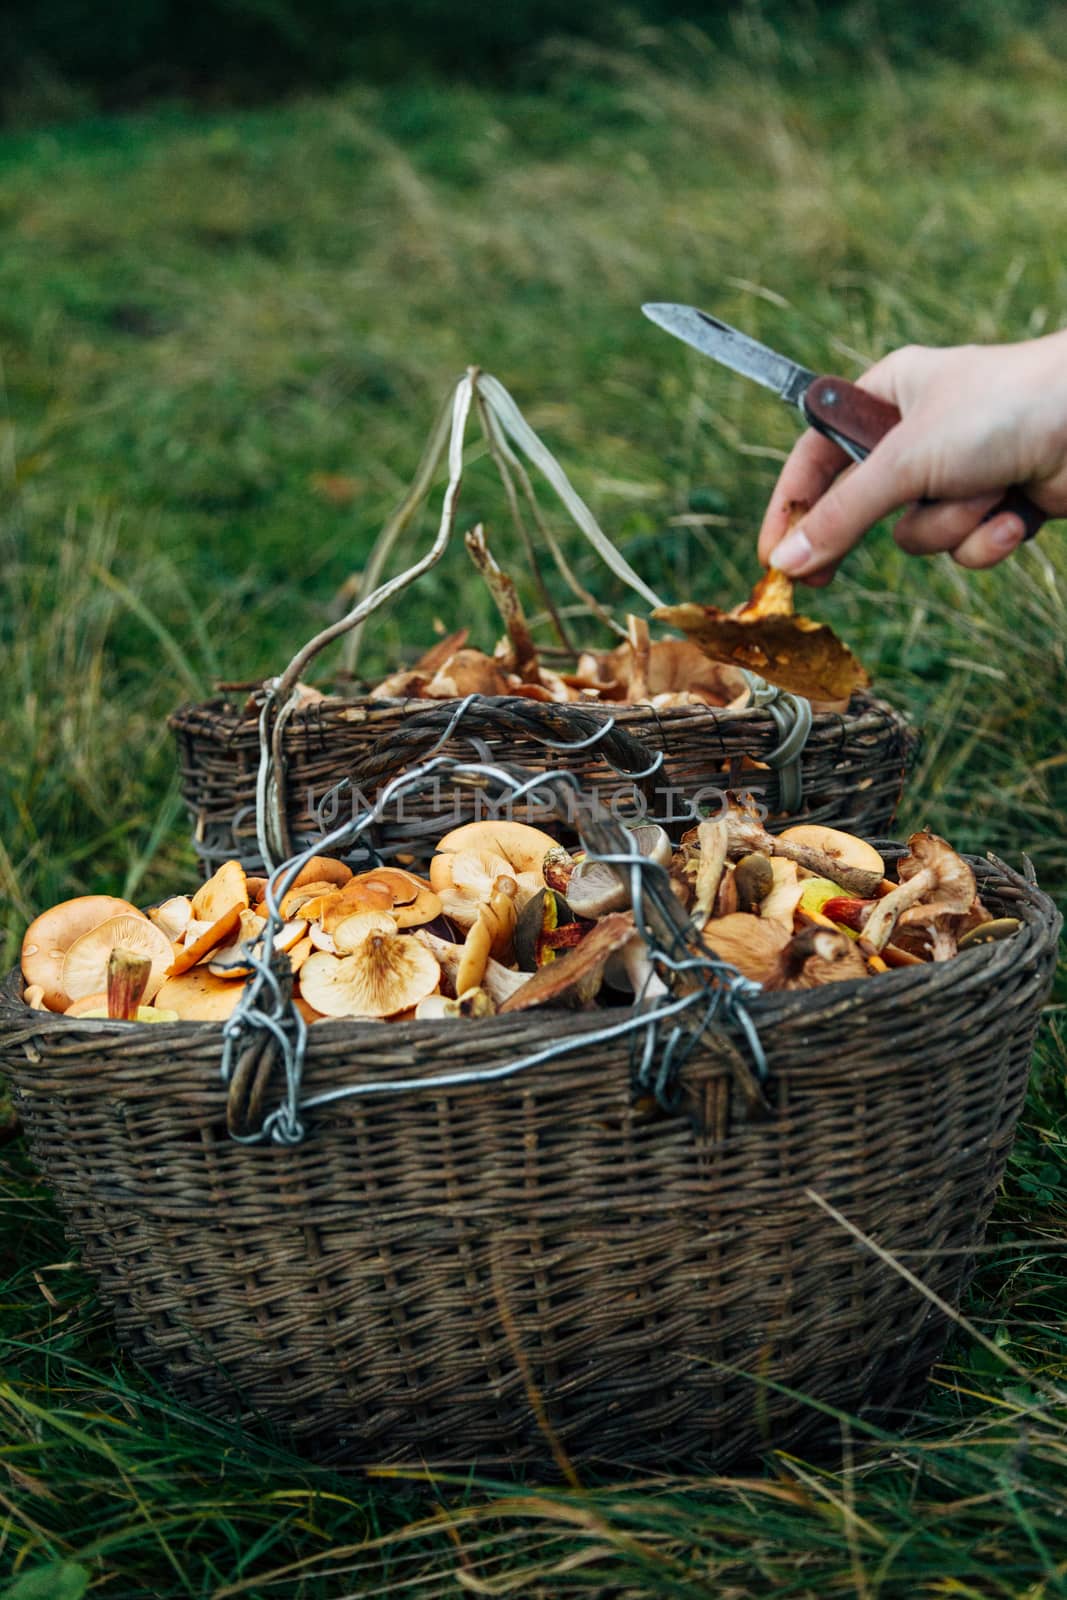 Forest mushrooms. Harvesting in autumn